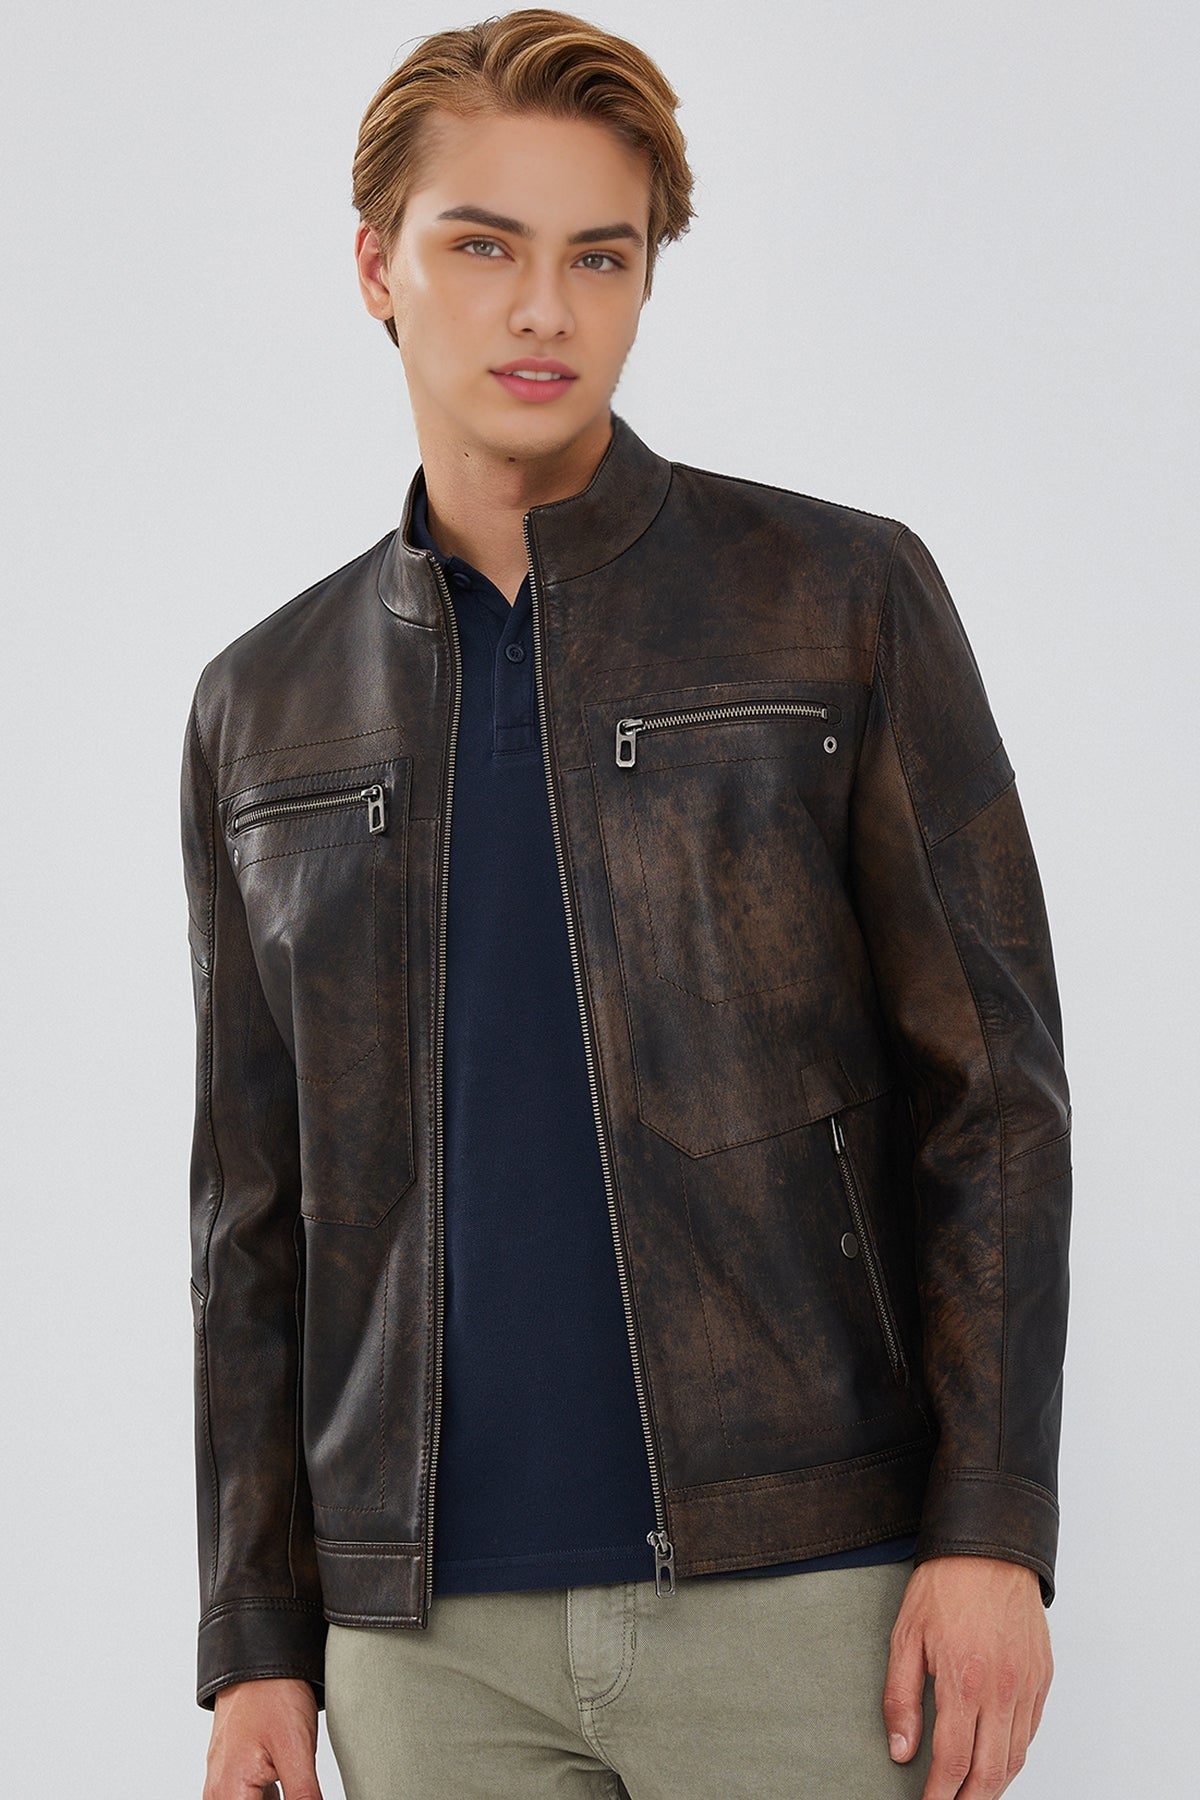 Kimmich Men's Brown Vintage Leather Jacket